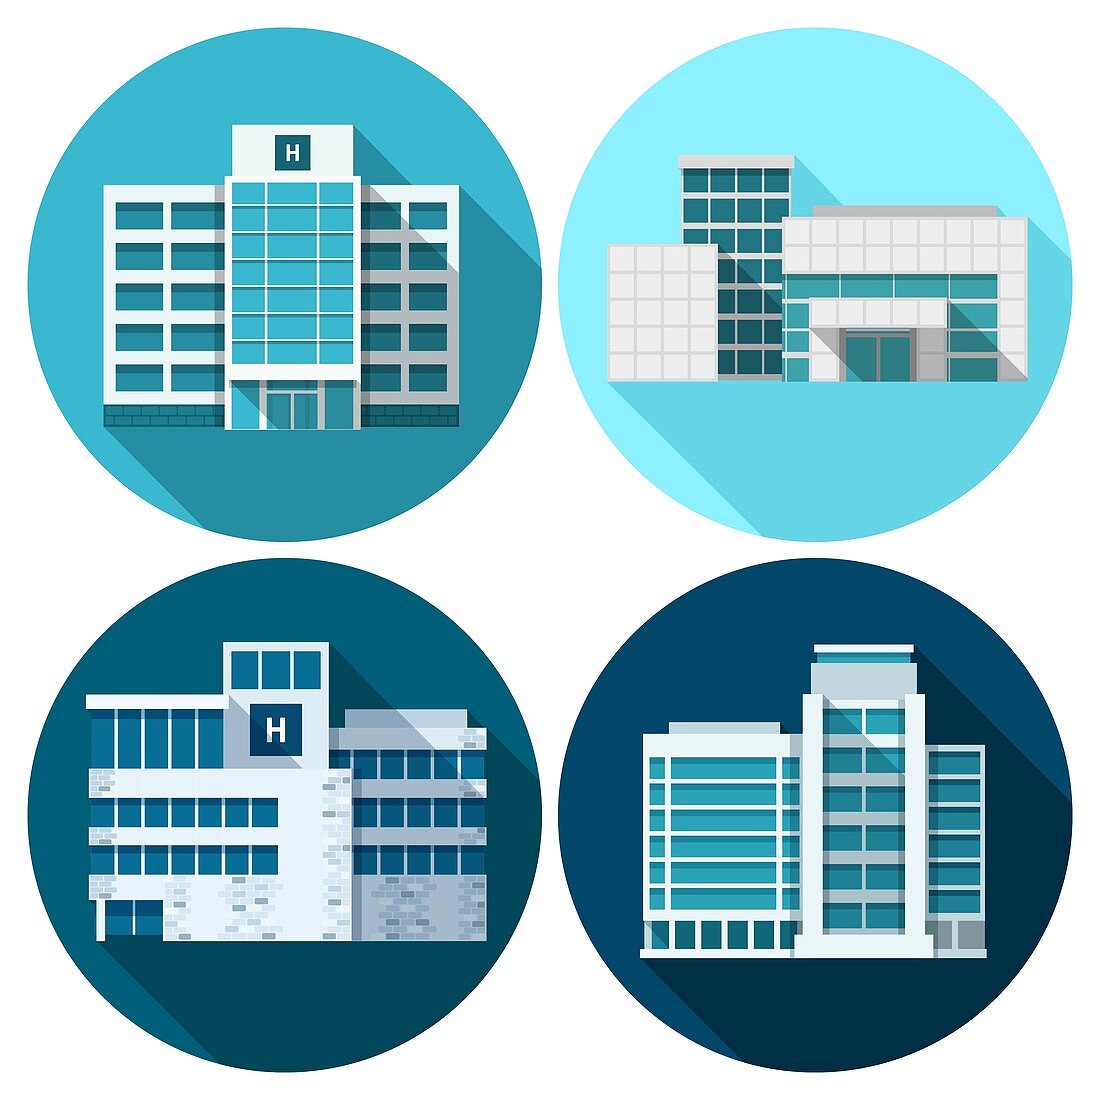 Hospital buildings, illustration